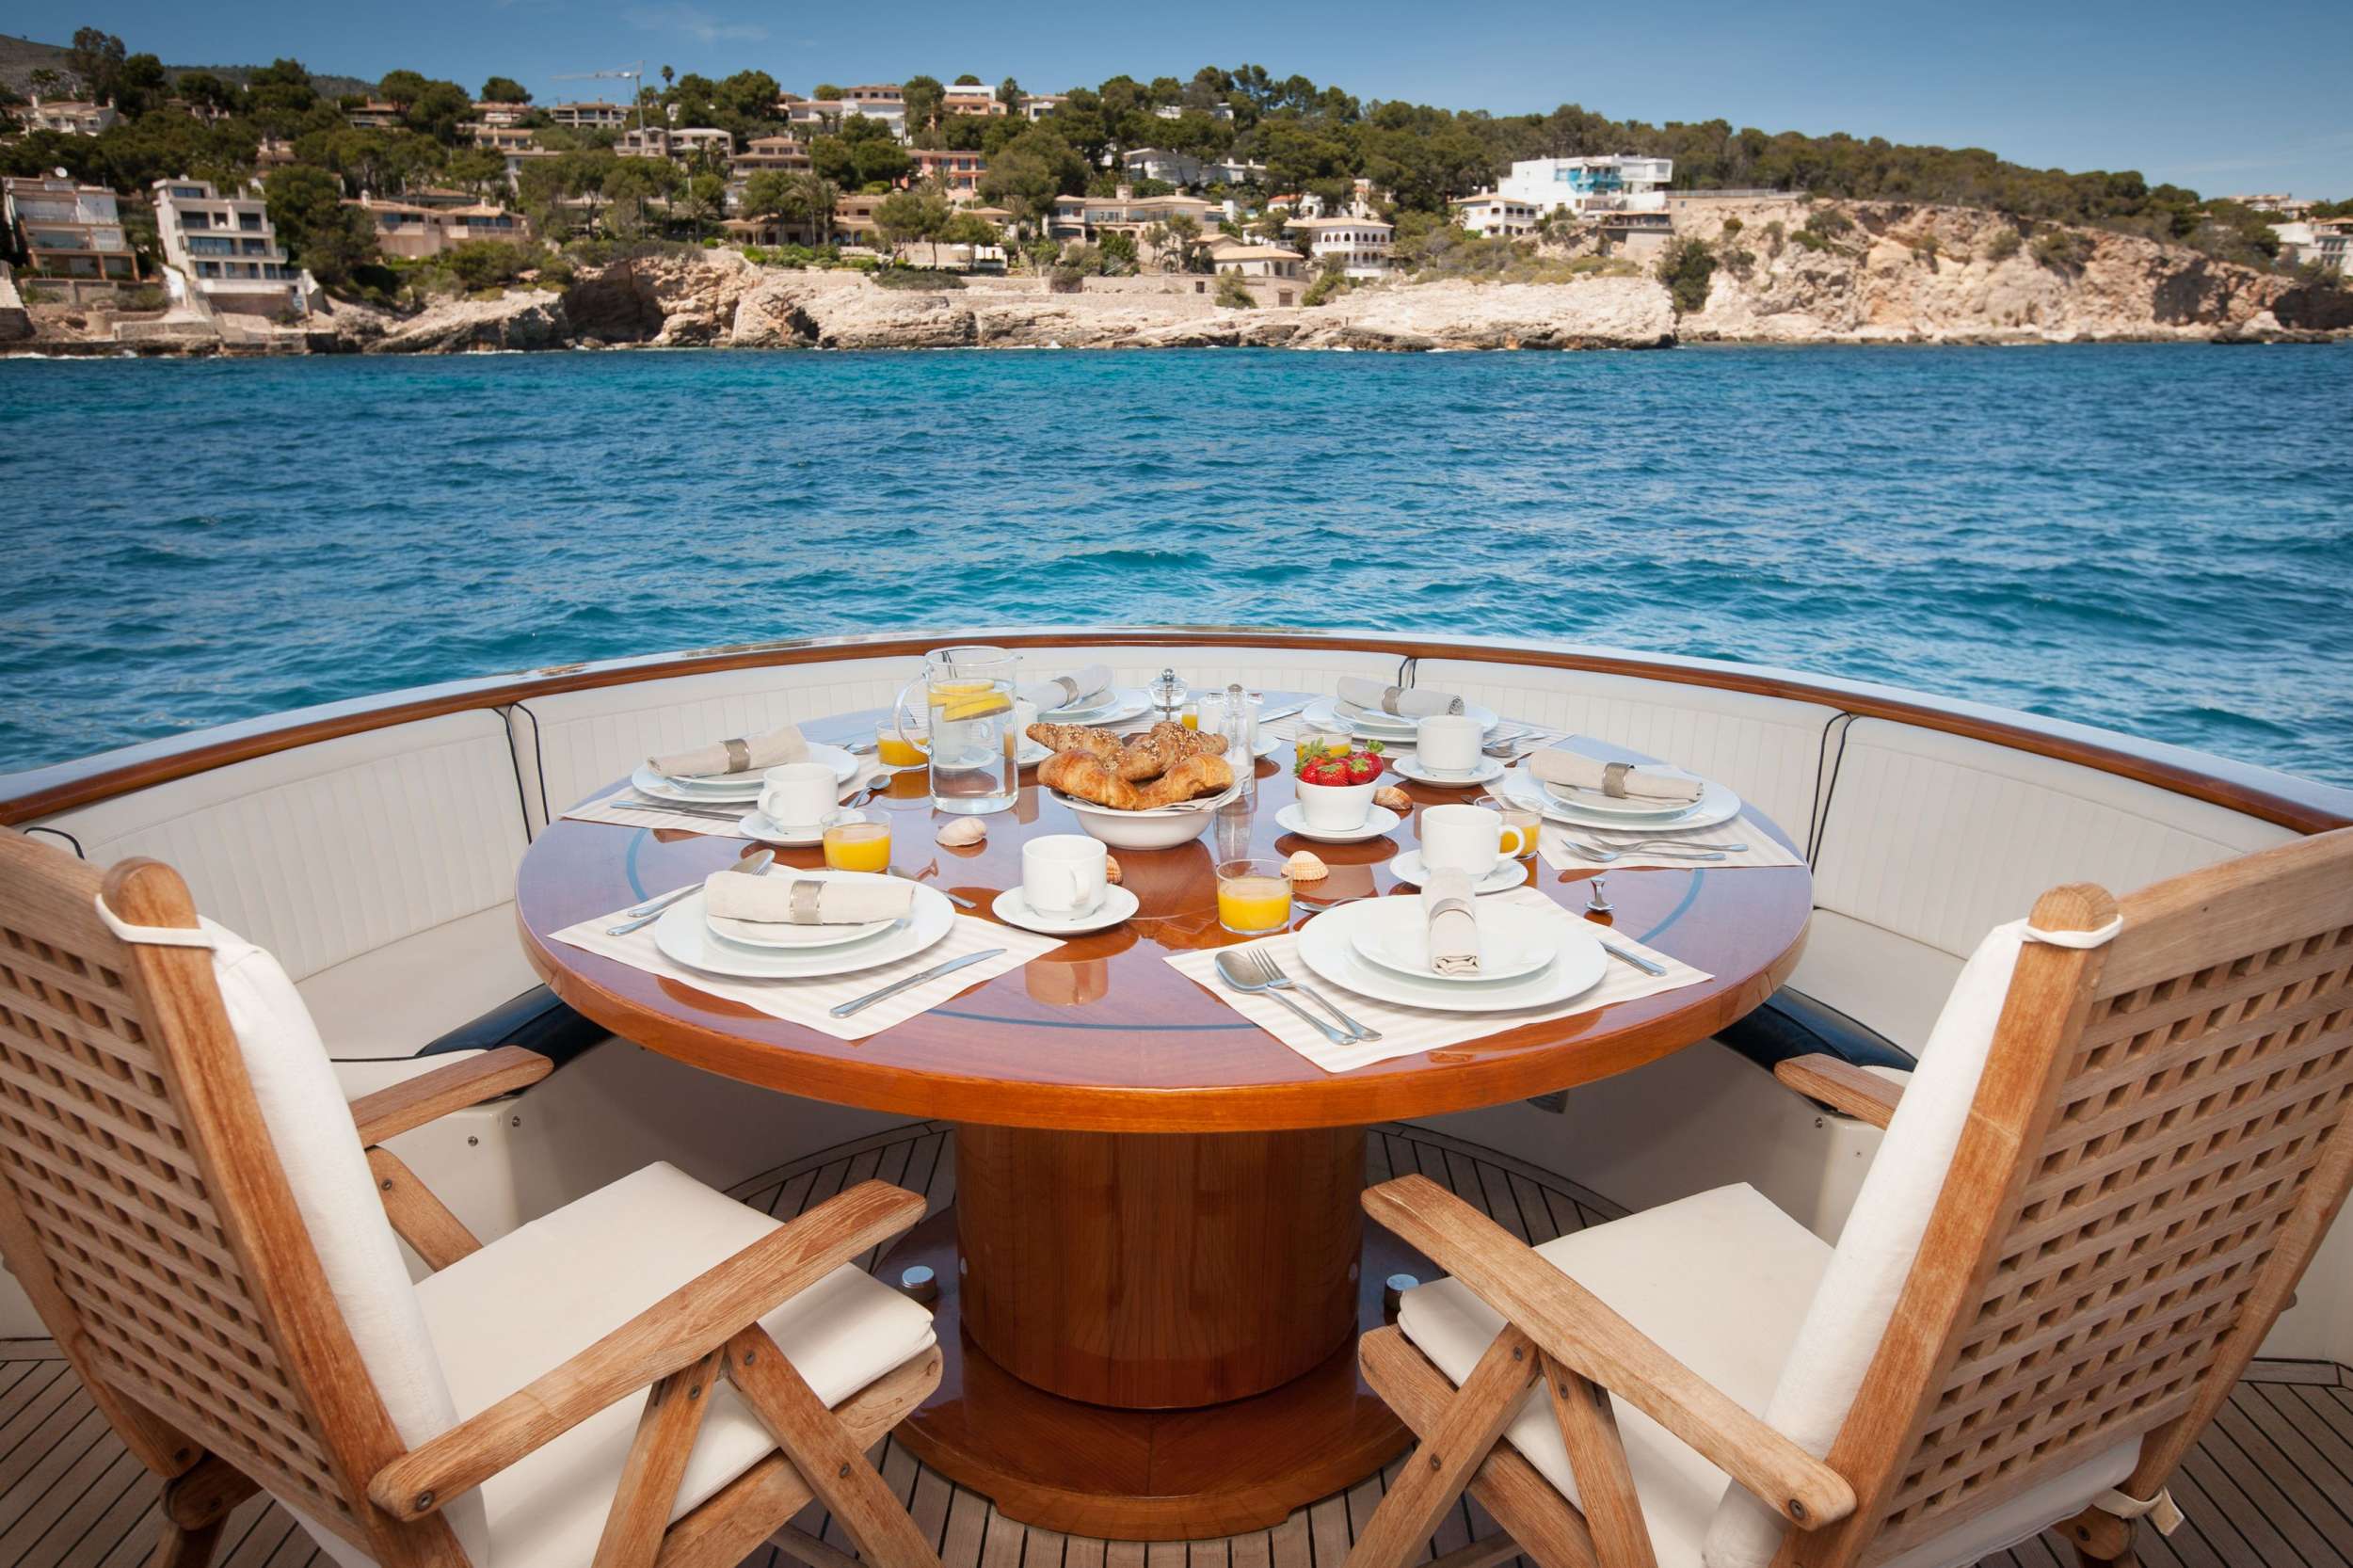 WHITE FANG - Yacht Charter La Savina & Boat hire in Balearics & Spain 4